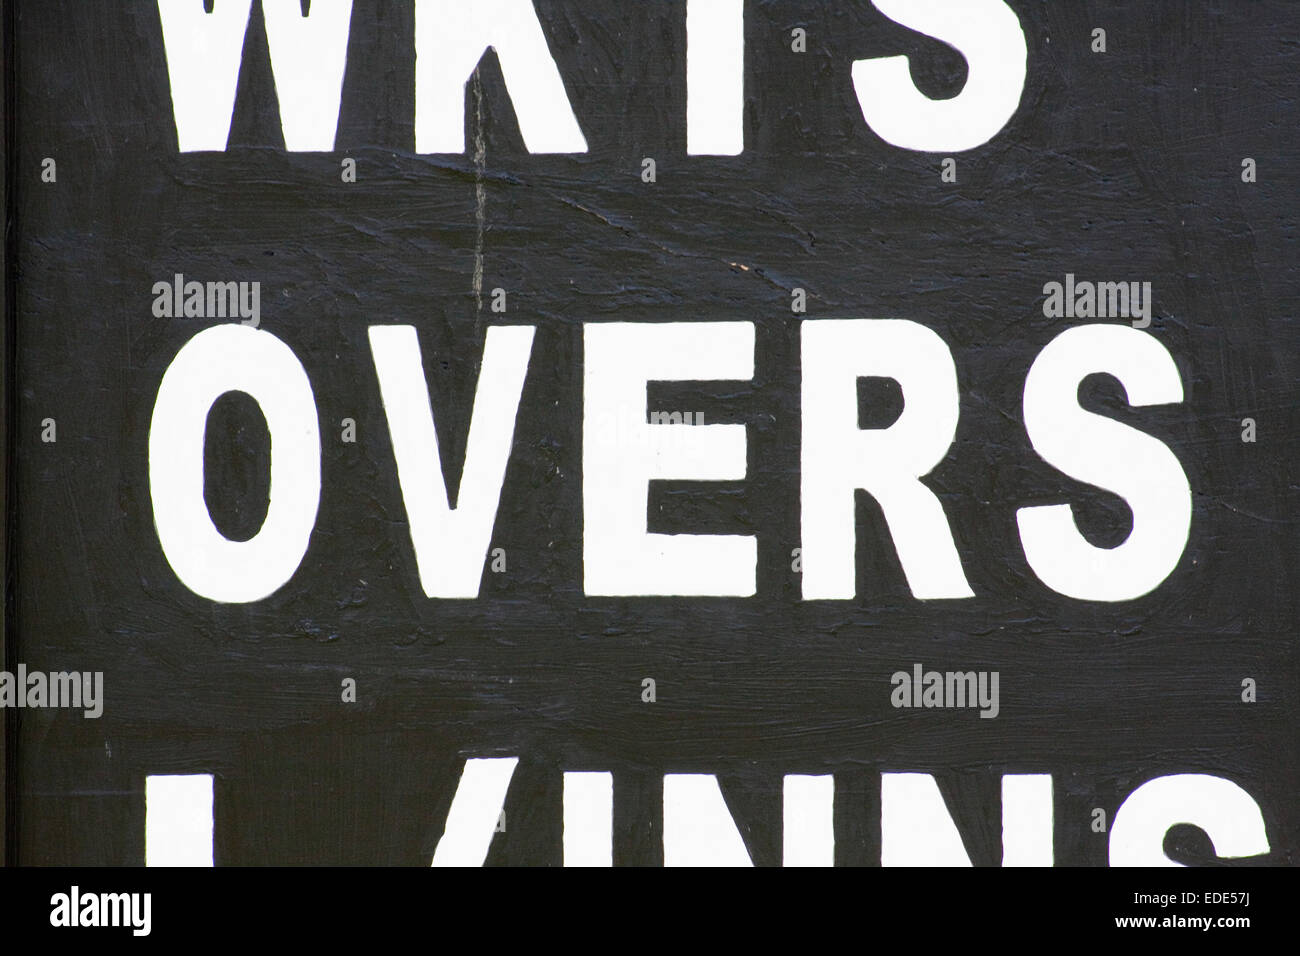 OVERS on a cricket scoreboard Stock Photo